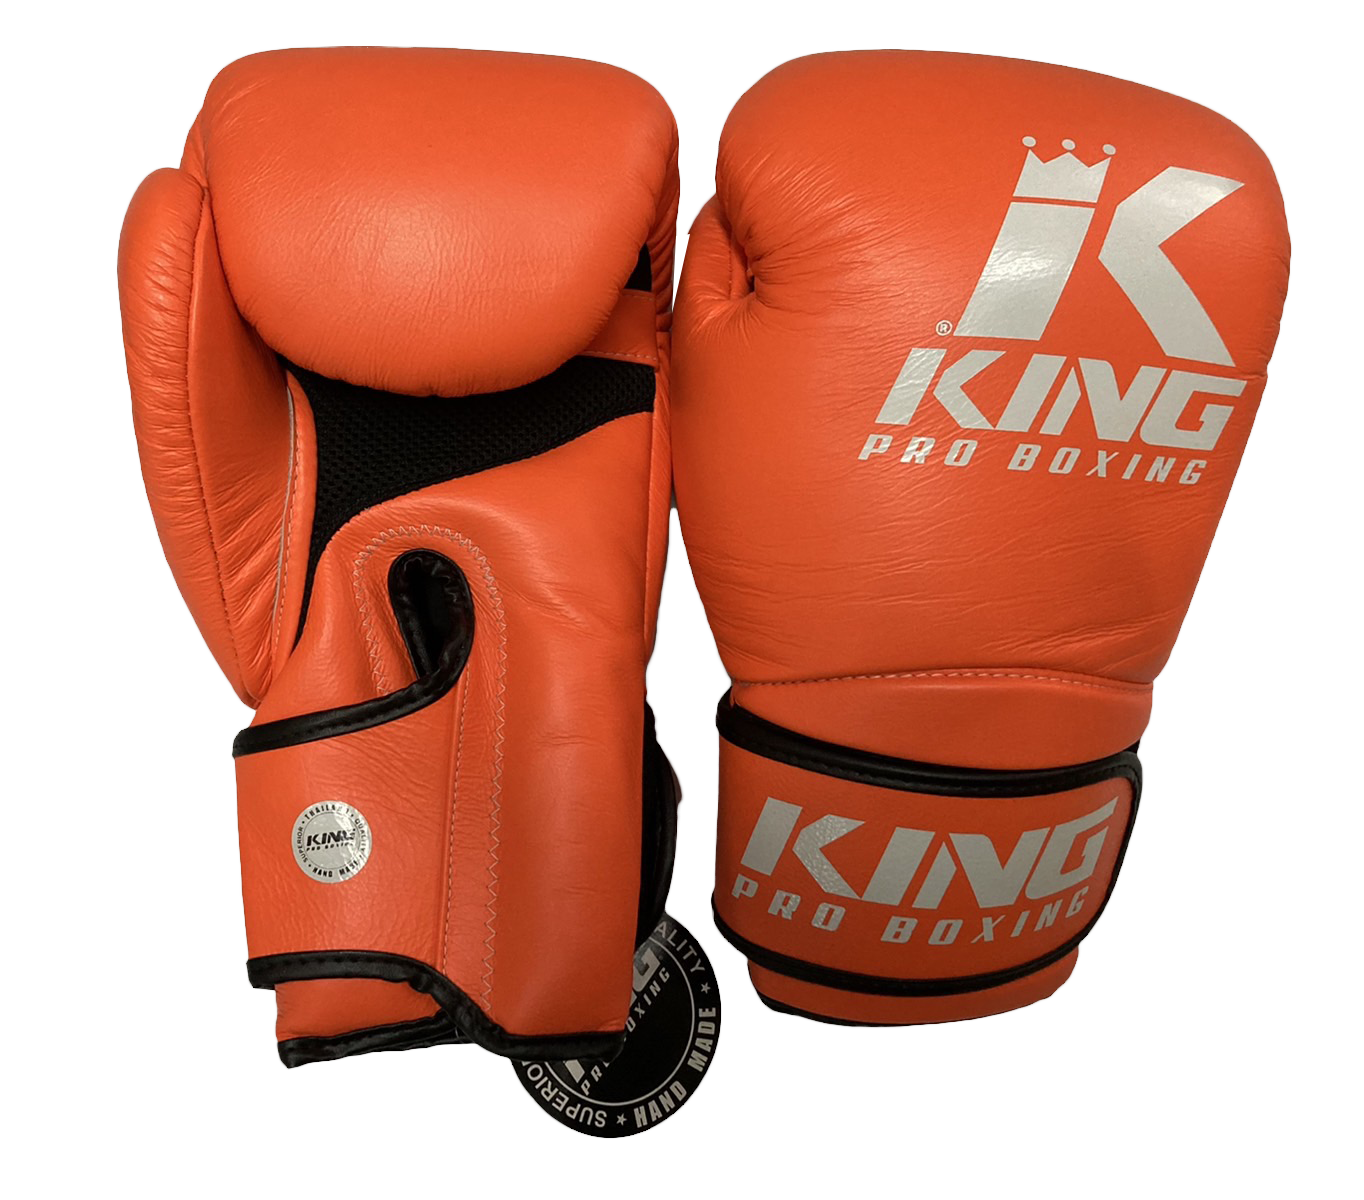 King Pro Boxing Gloves STAR MESH6